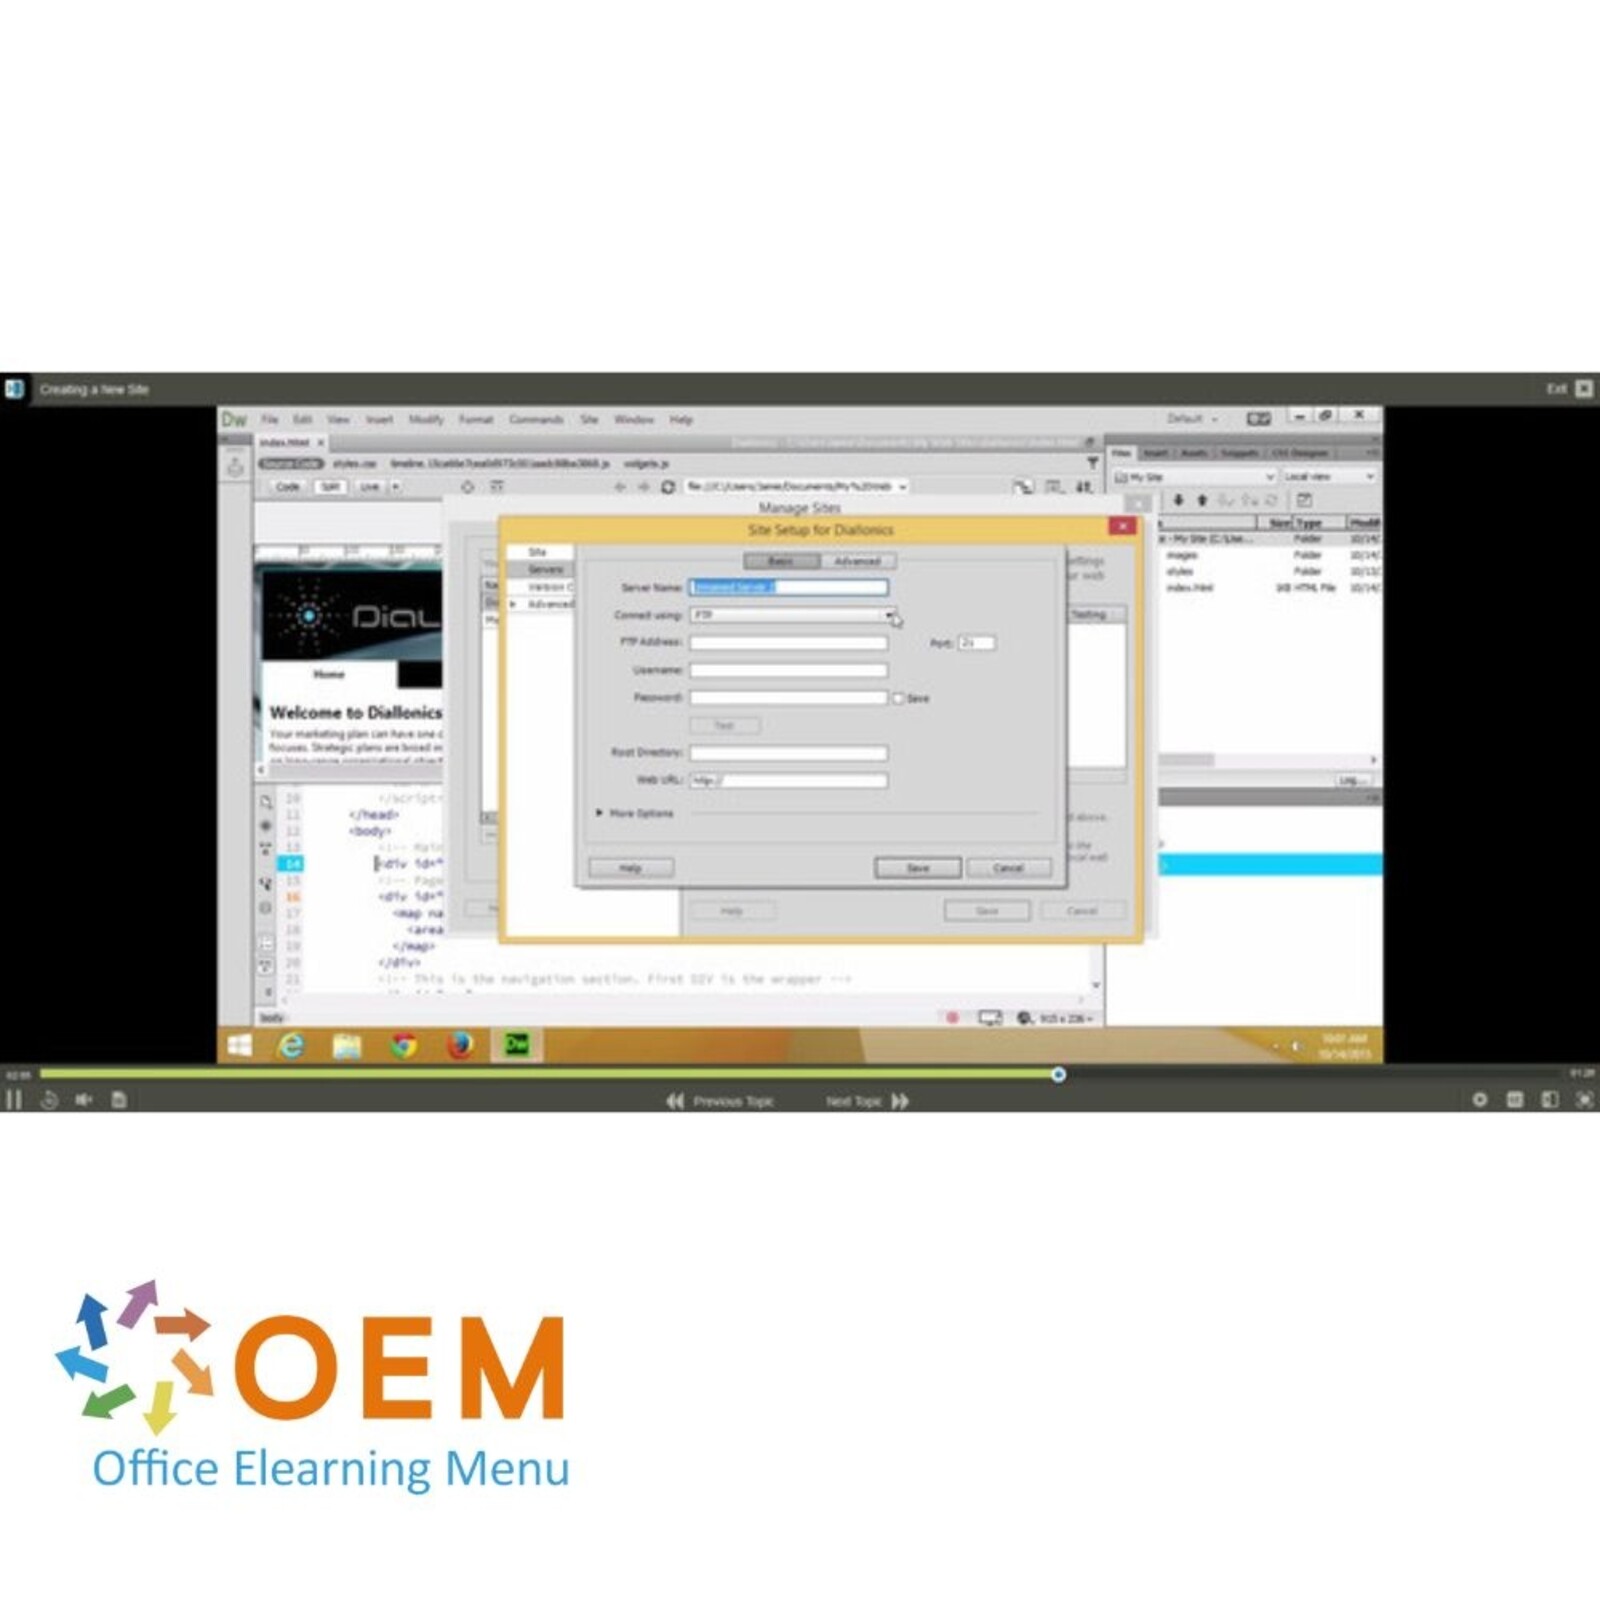 Adobe Dreamweaver Adobe Dreamweaver CC 2015 Course E-Learning